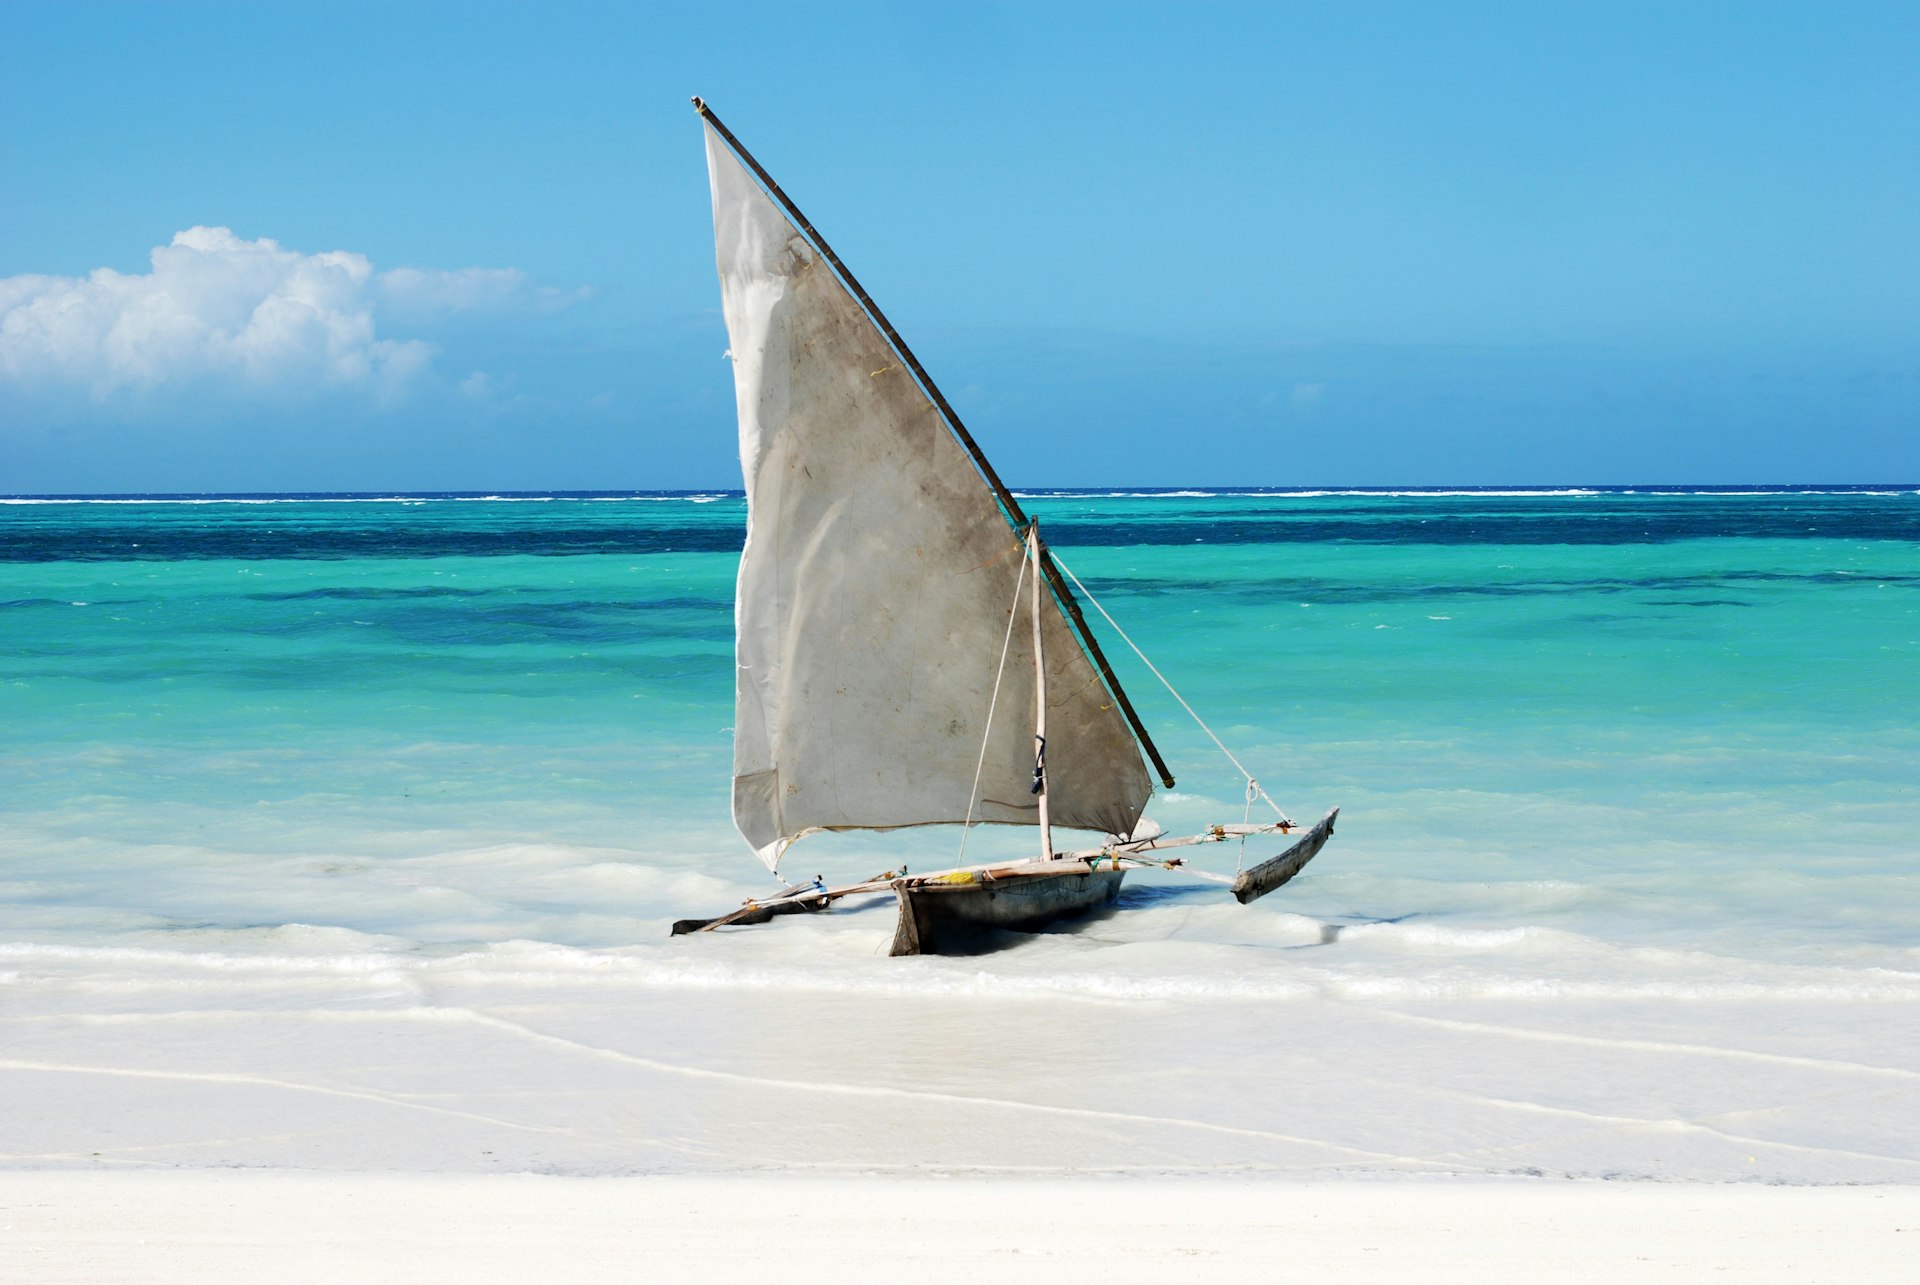 A traditional sailing boat on a beach in Zanzibar